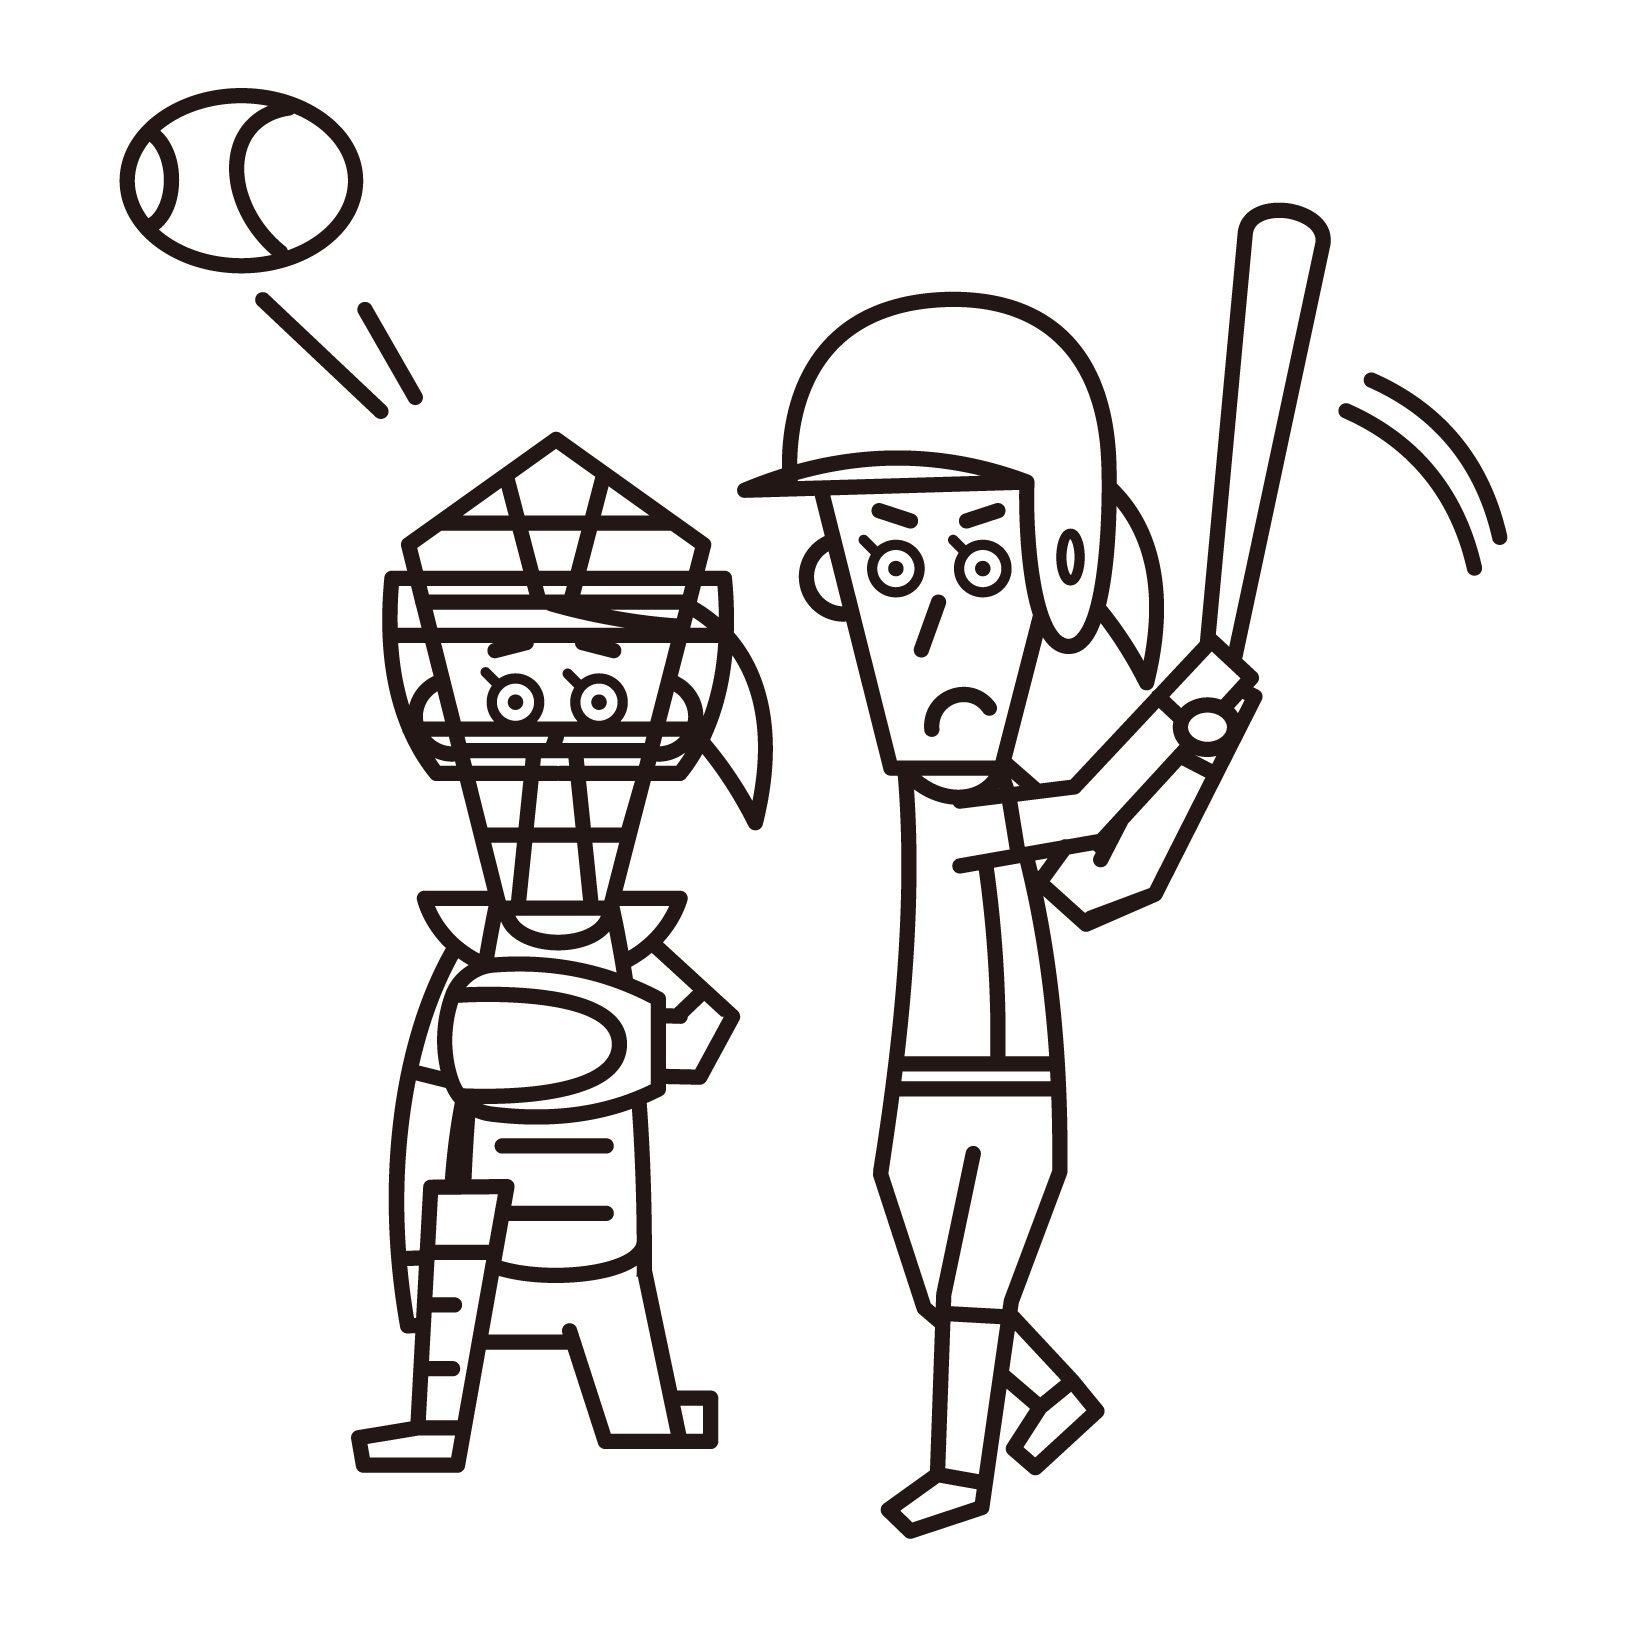 Illustration of a baseball player (woman) hitting a home run